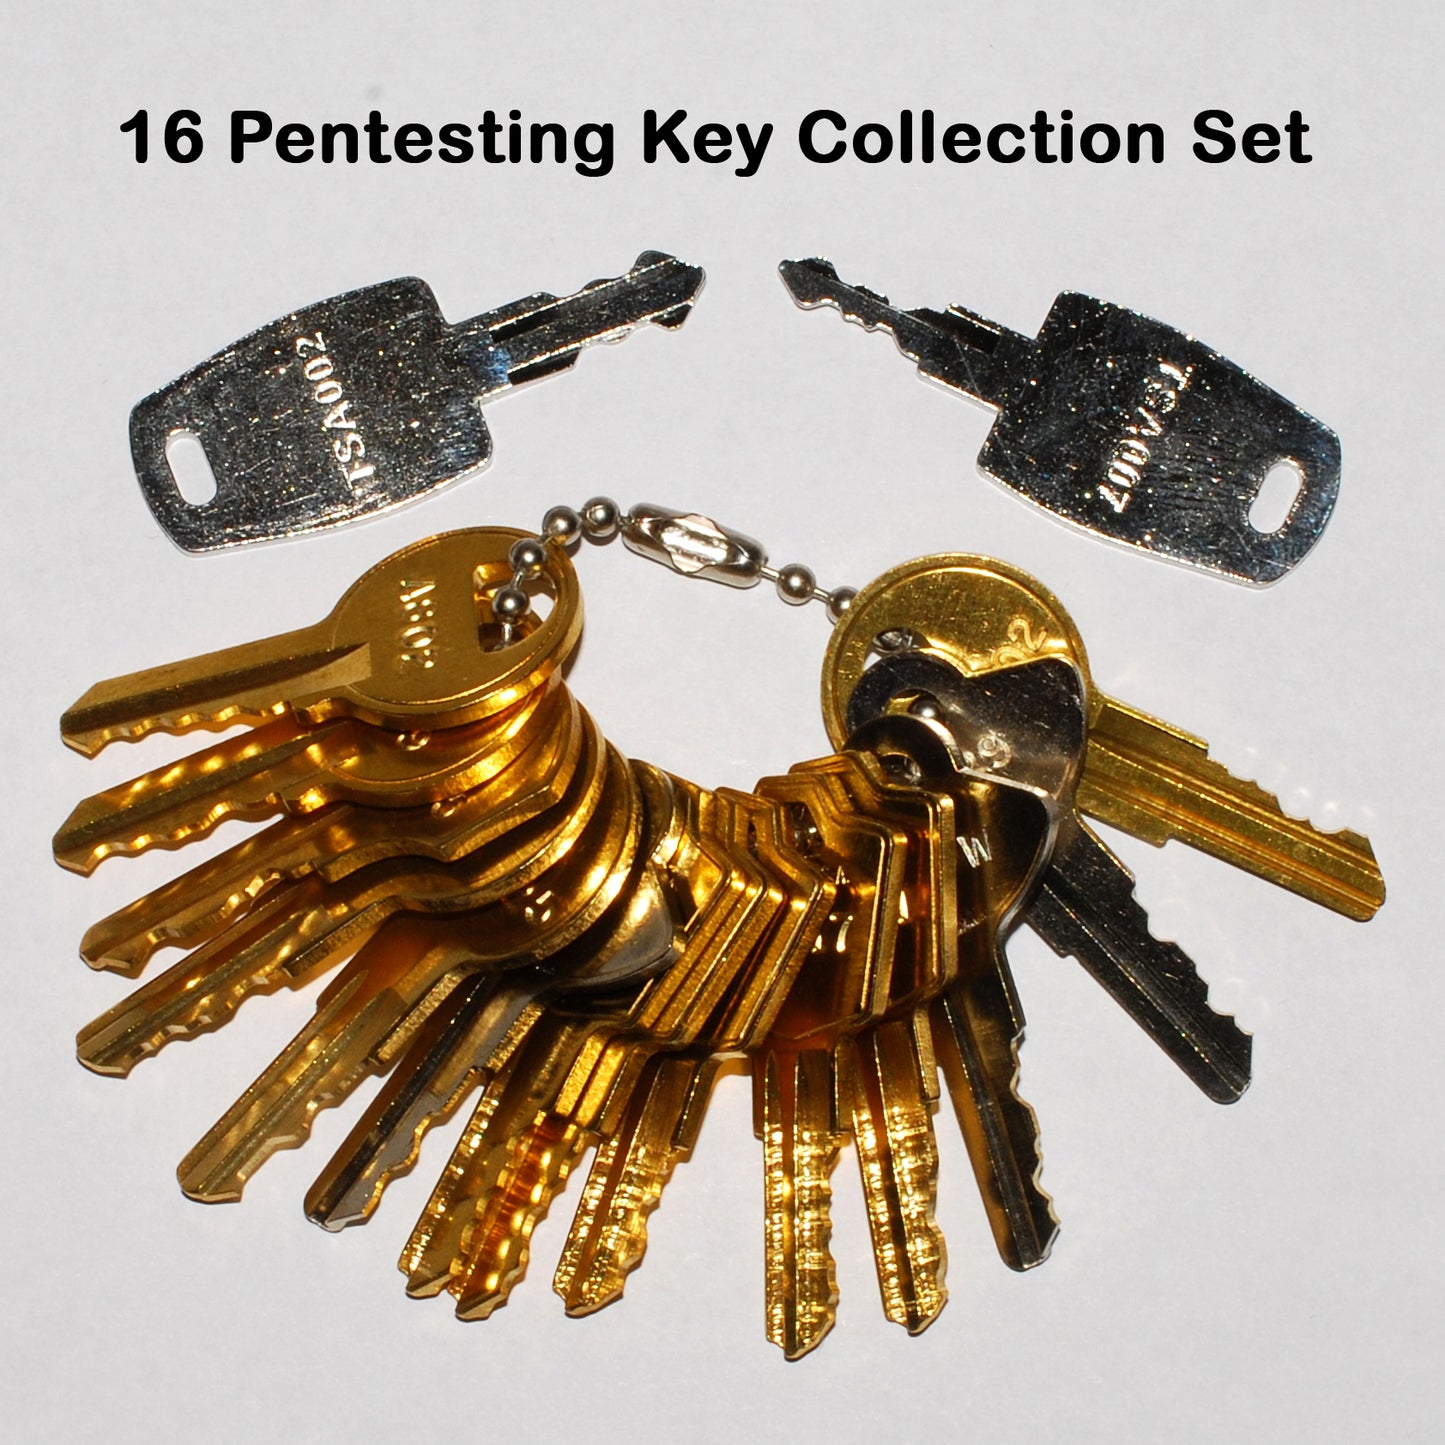 16 Pentesting Key Collection Set